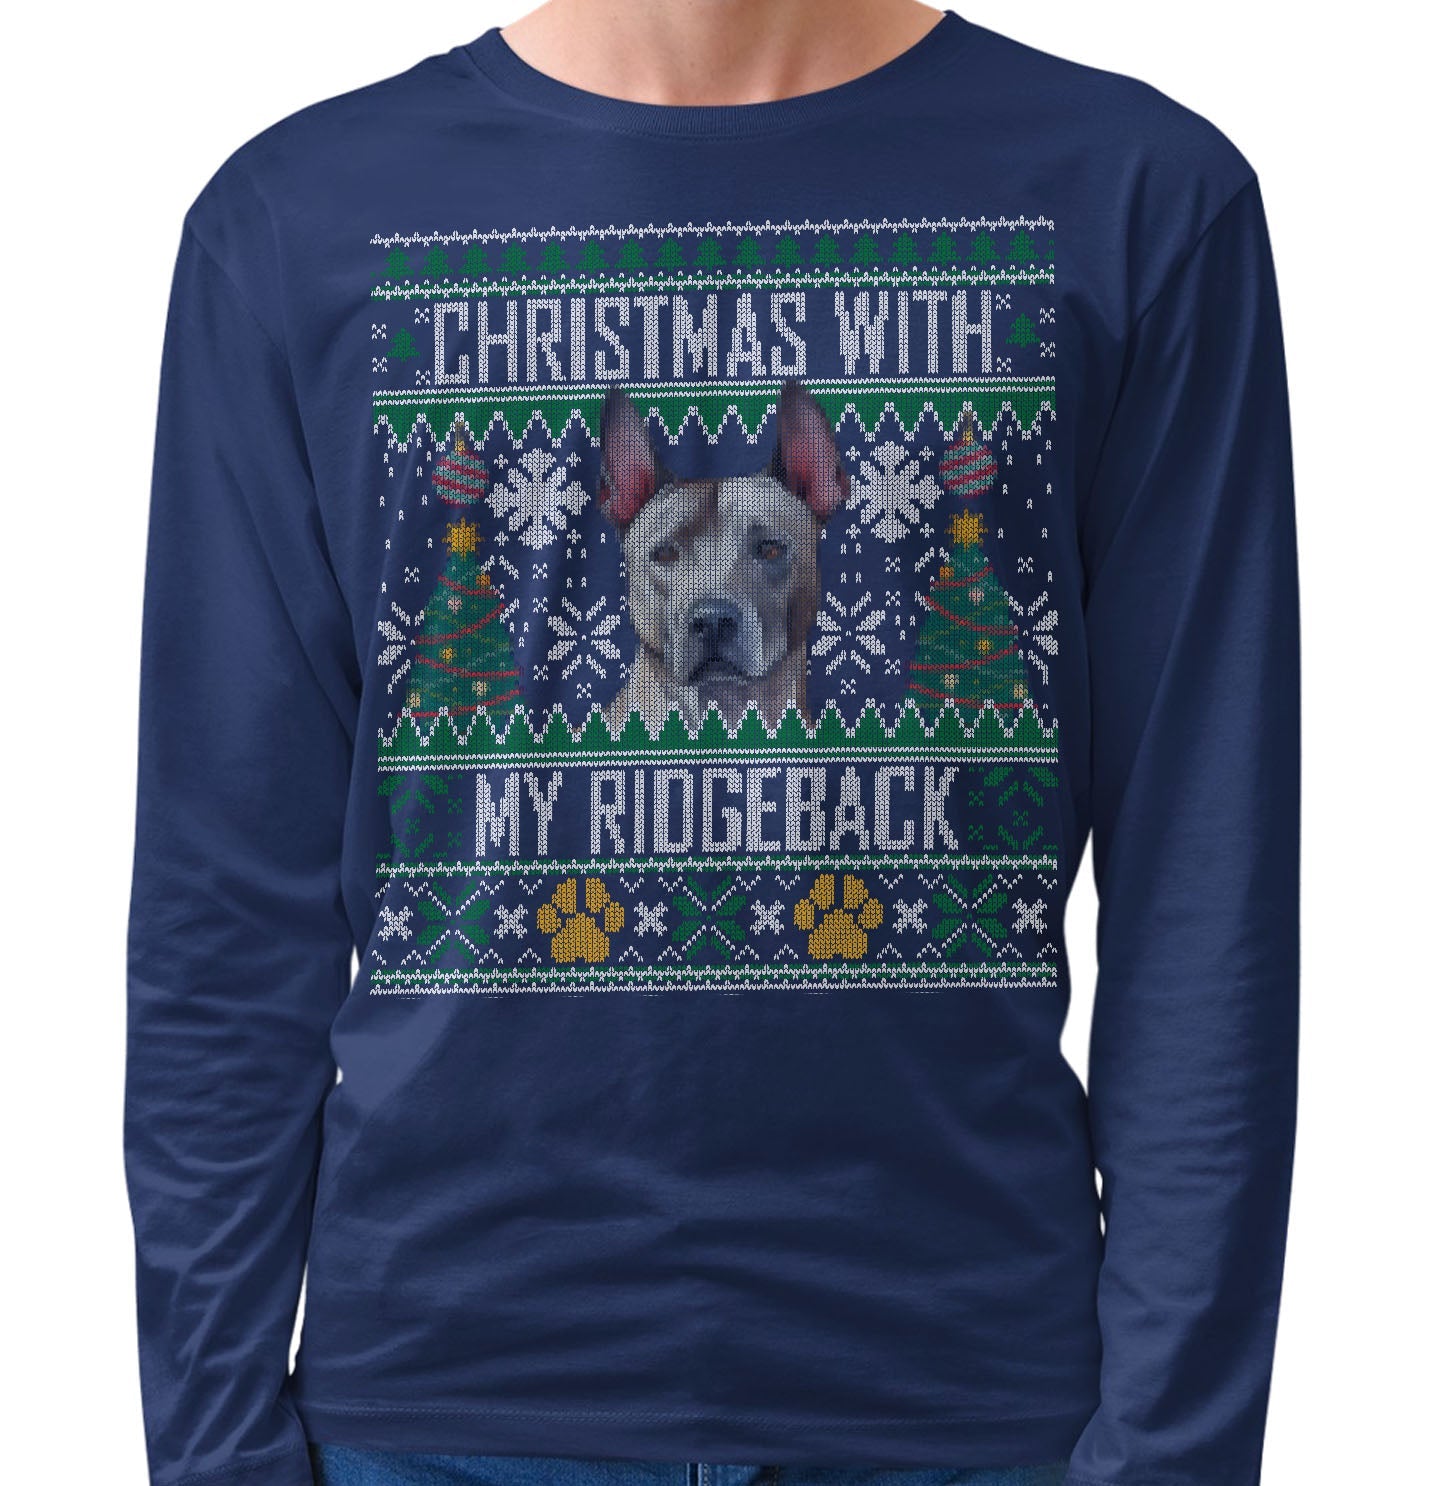 Ugly Sweater Christmas with My Thai Ridgeback - Adult Unisex Long Sleeve T-Shirt